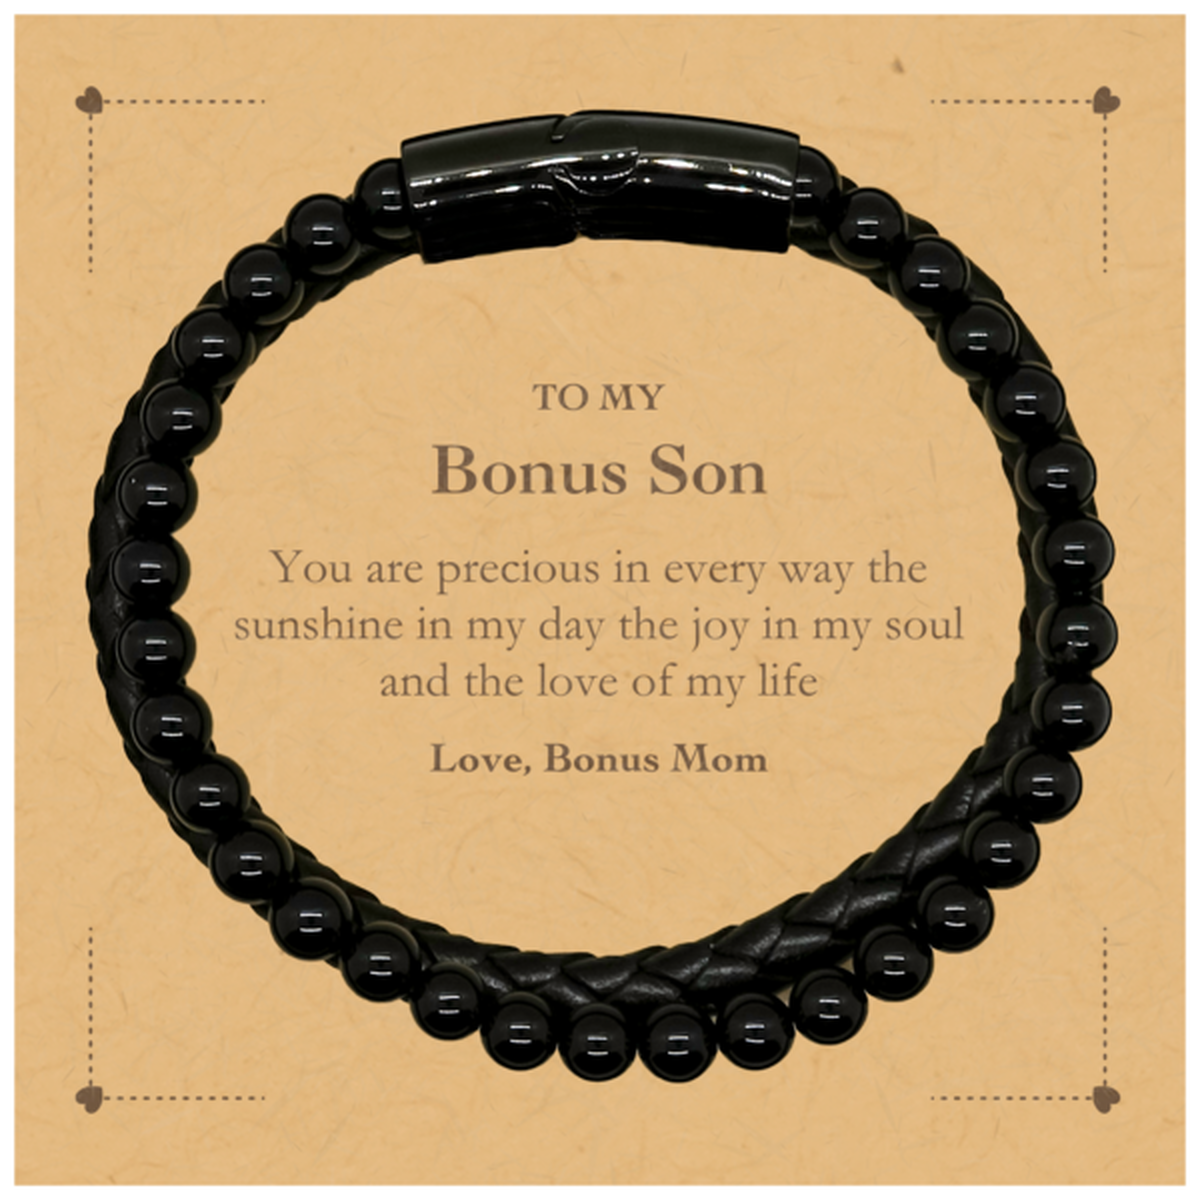 Graduation Gifts for Bonus Son Stone Leather Bracelets Present from Bonus Mom, Christmas Bonus Son Birthday Gifts Bonus Son You are precious in every way the sunshine in my day. Love, Bonus Mom